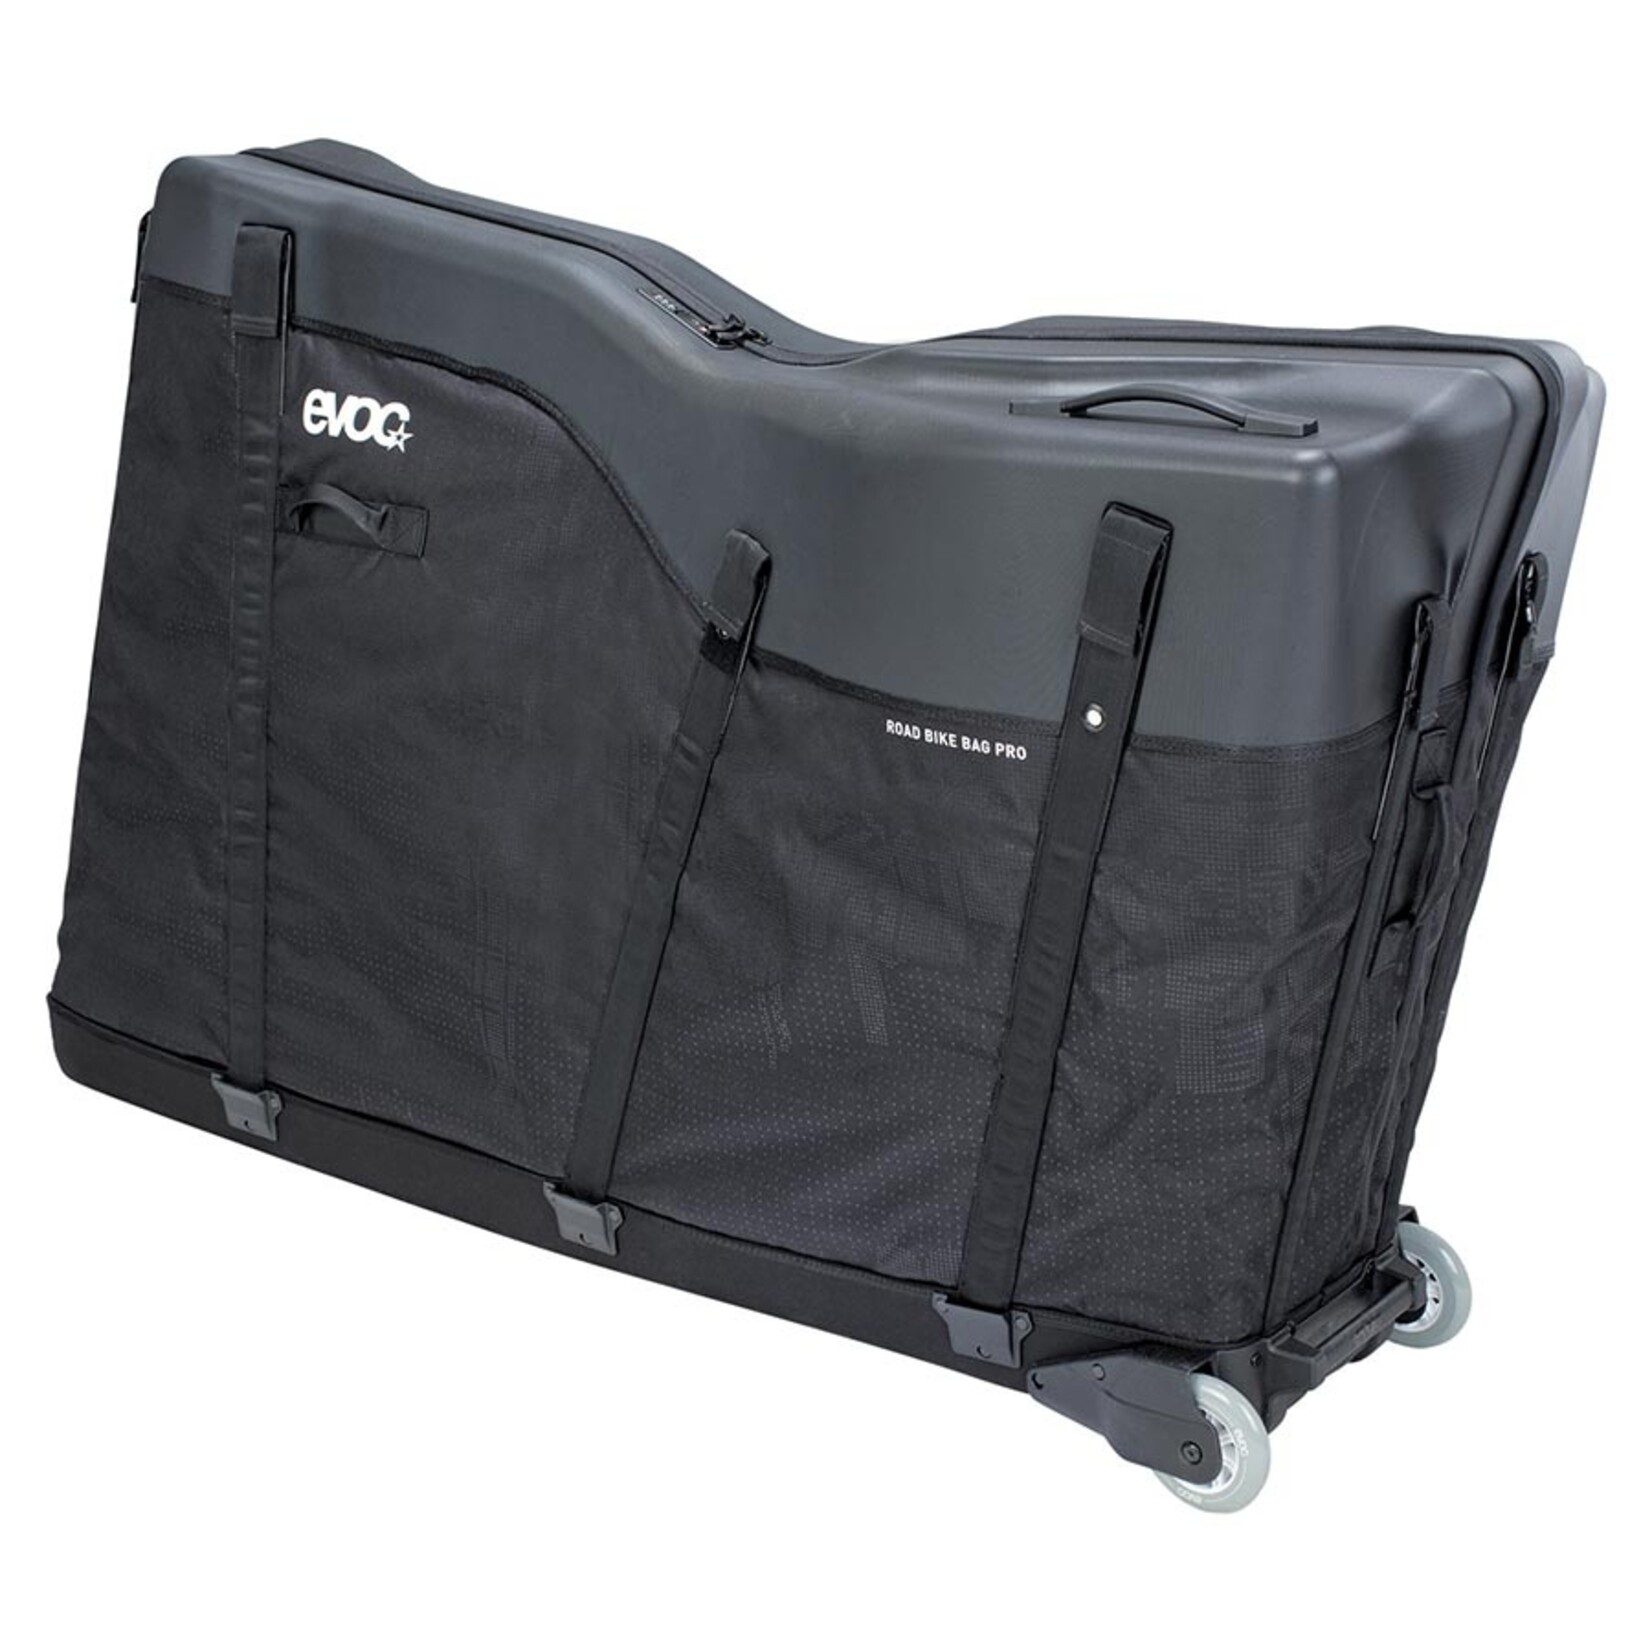 EVOC EVOC, Road Bike Bag Pro, Black, 300L, 92x130x32